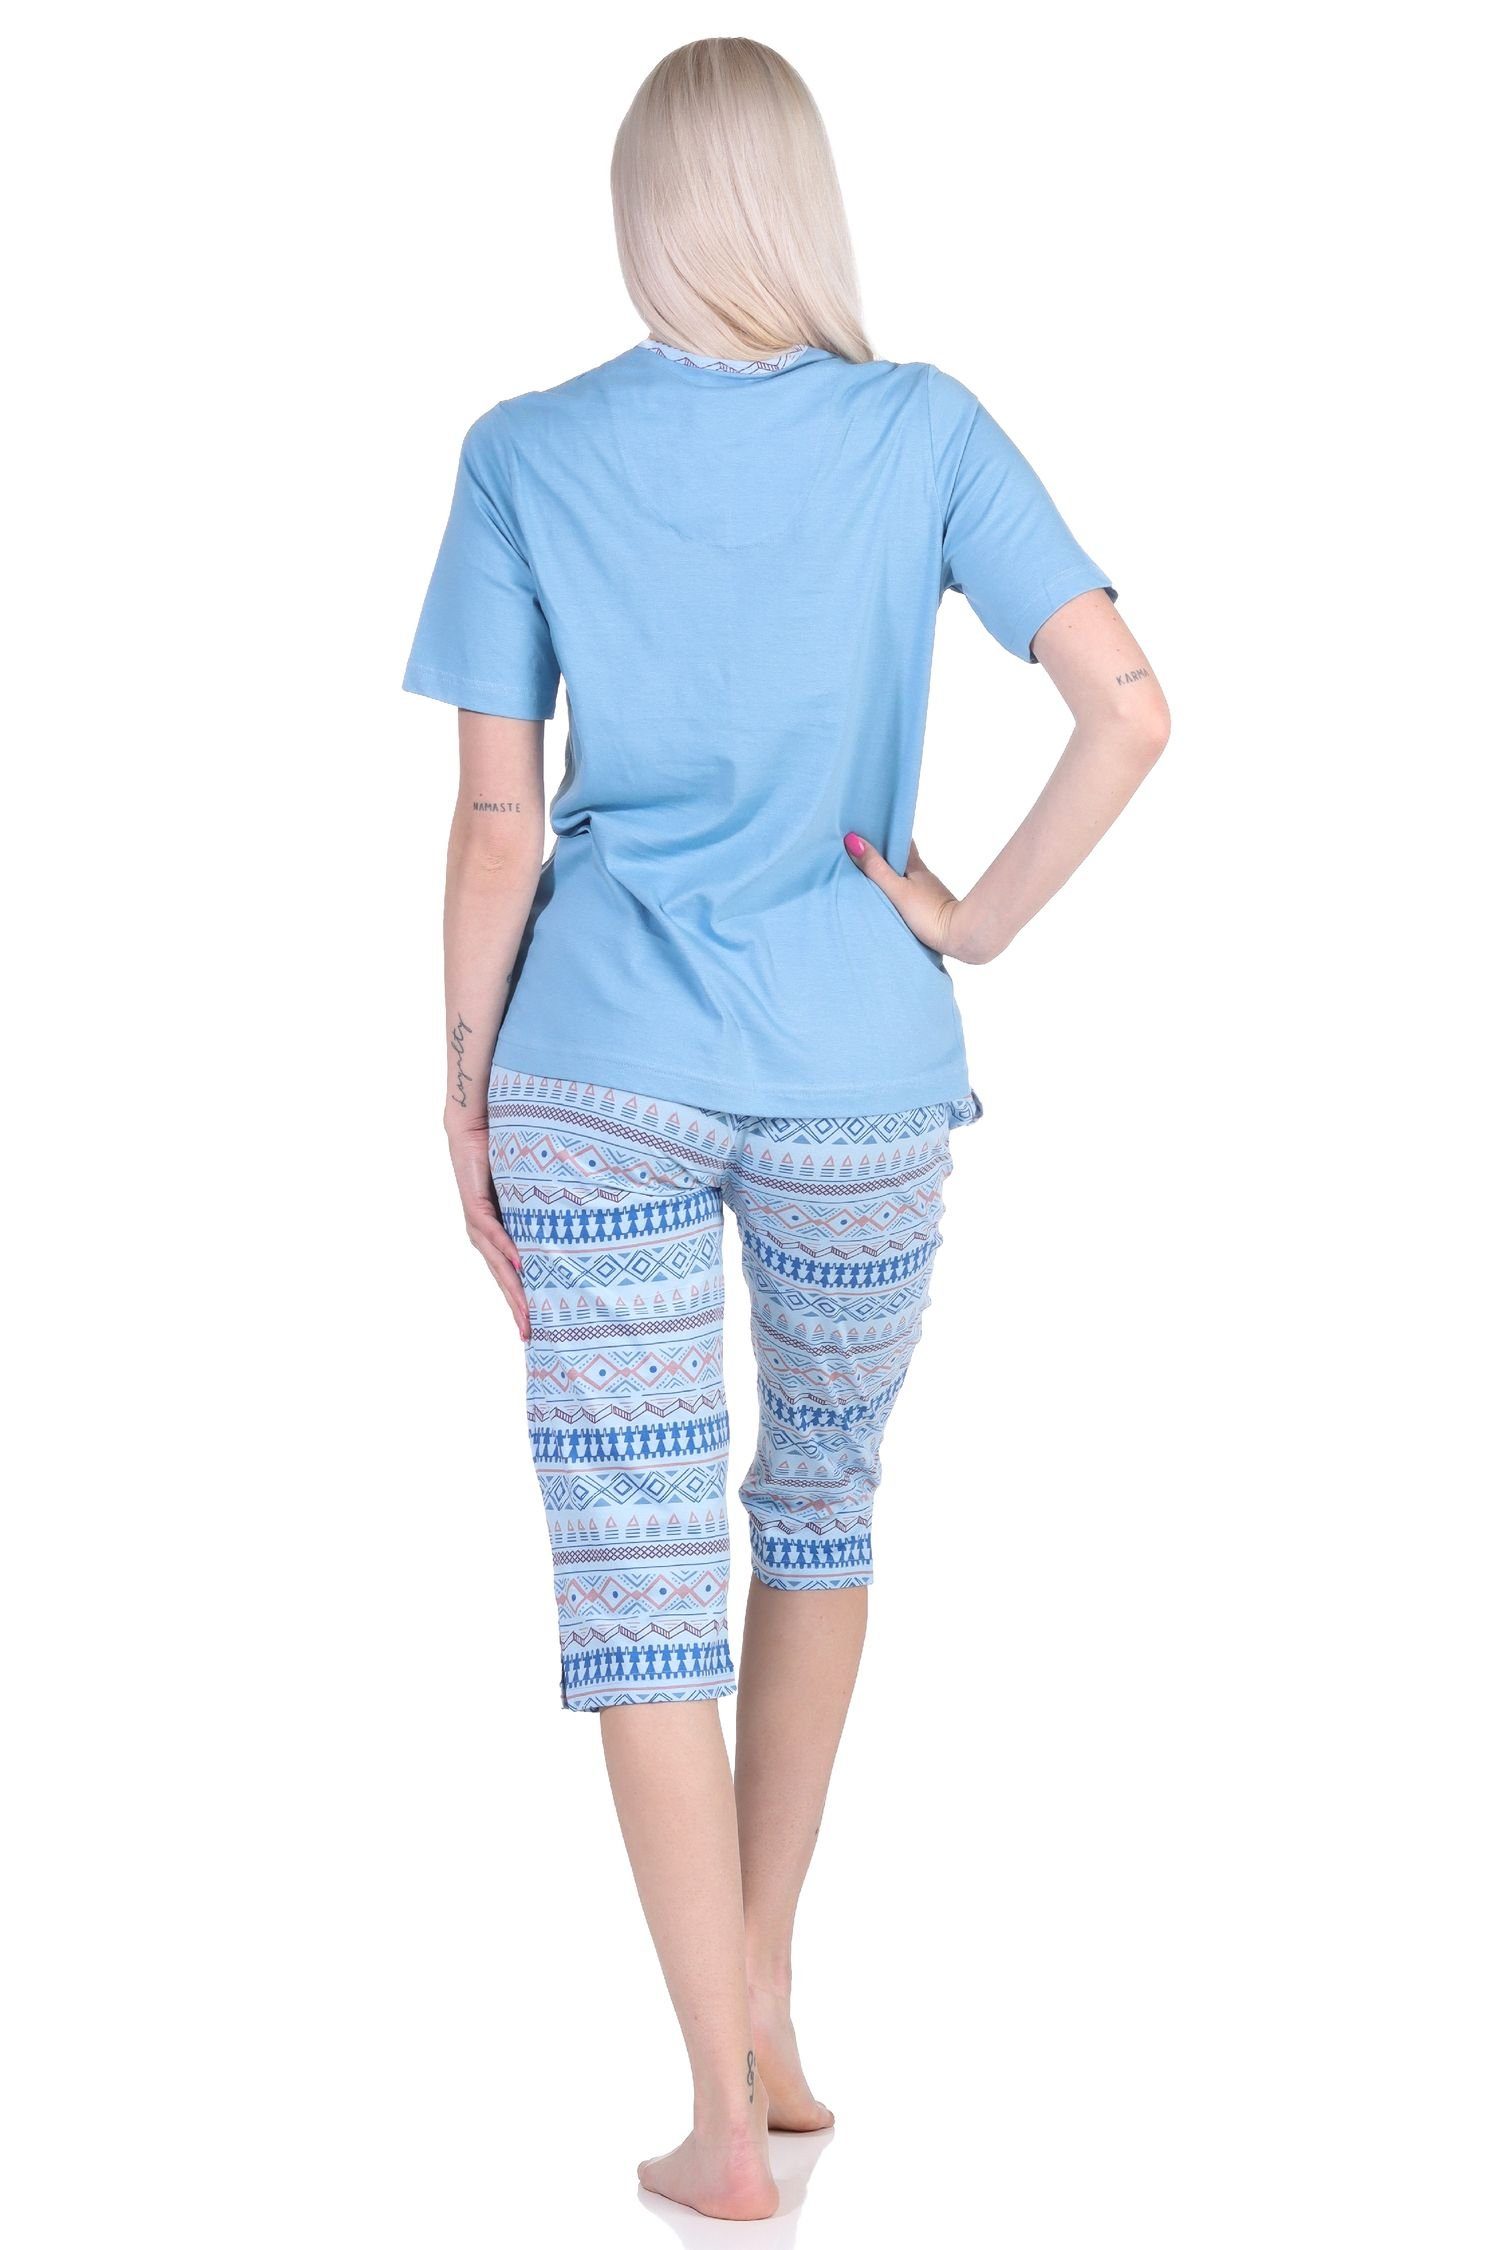 im Normann Damen Caprihose hellblau Pyjama Schlafanzug Ethnolook mit kurzarm